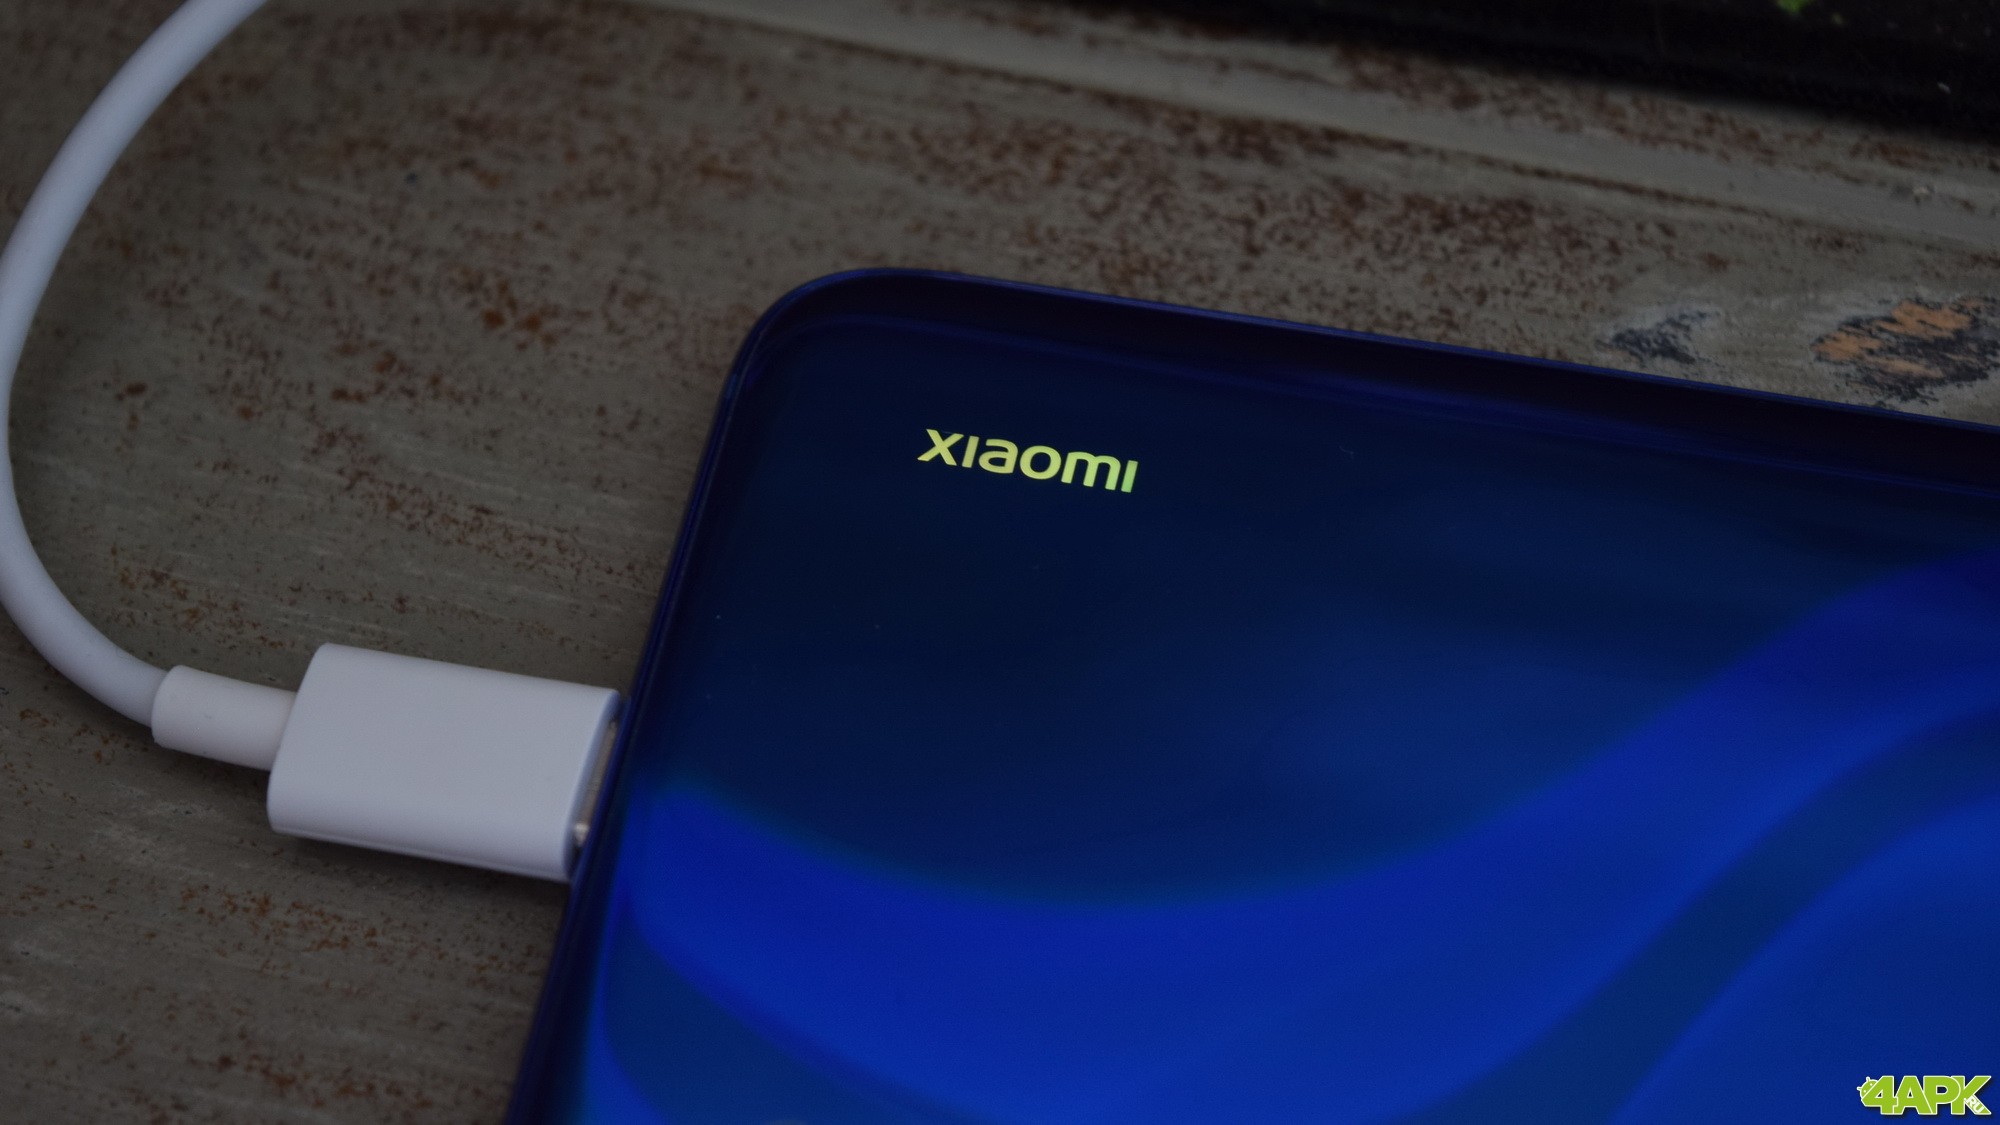  Обзор Xiaomi Mi 9 Lite: младшая модель со своими особенностями Xiaomi  - xiaomi_mi_9_lite_mladshij_brat_s_unikalnoj_fishkoj_picture20_0